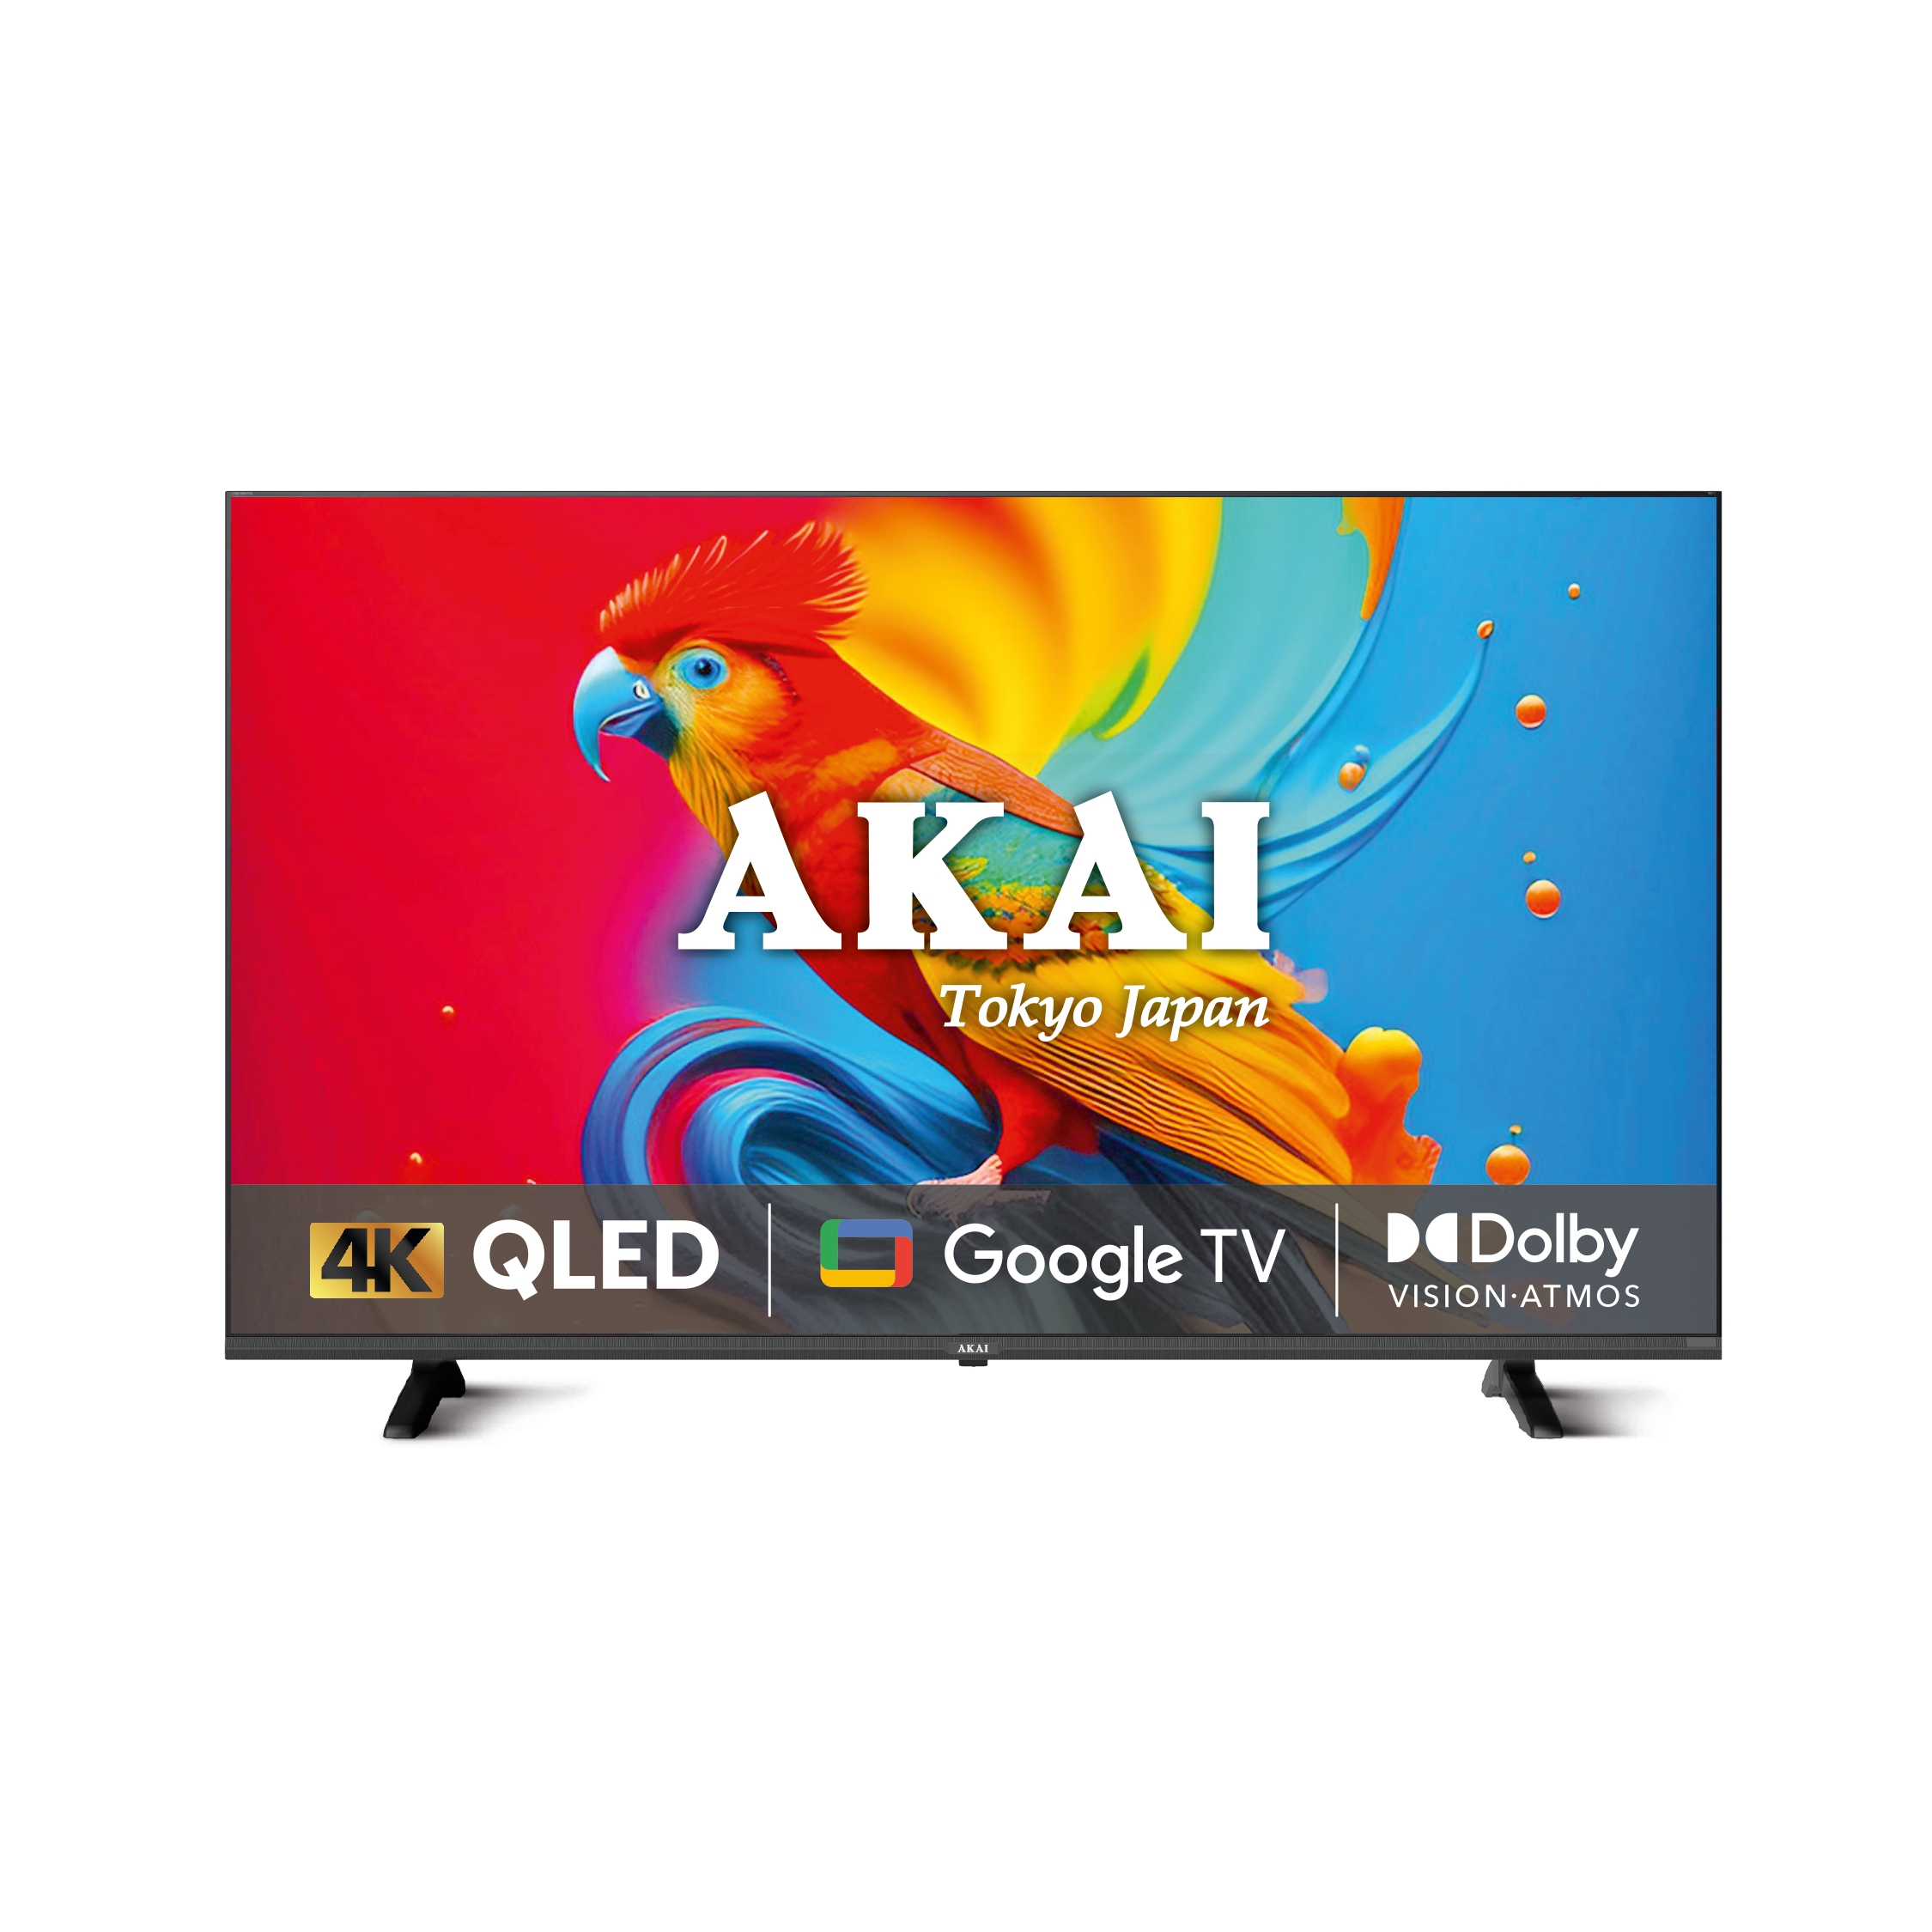 AKAI India Unveils New 4K QLED Google TV Series at Reliance Digital